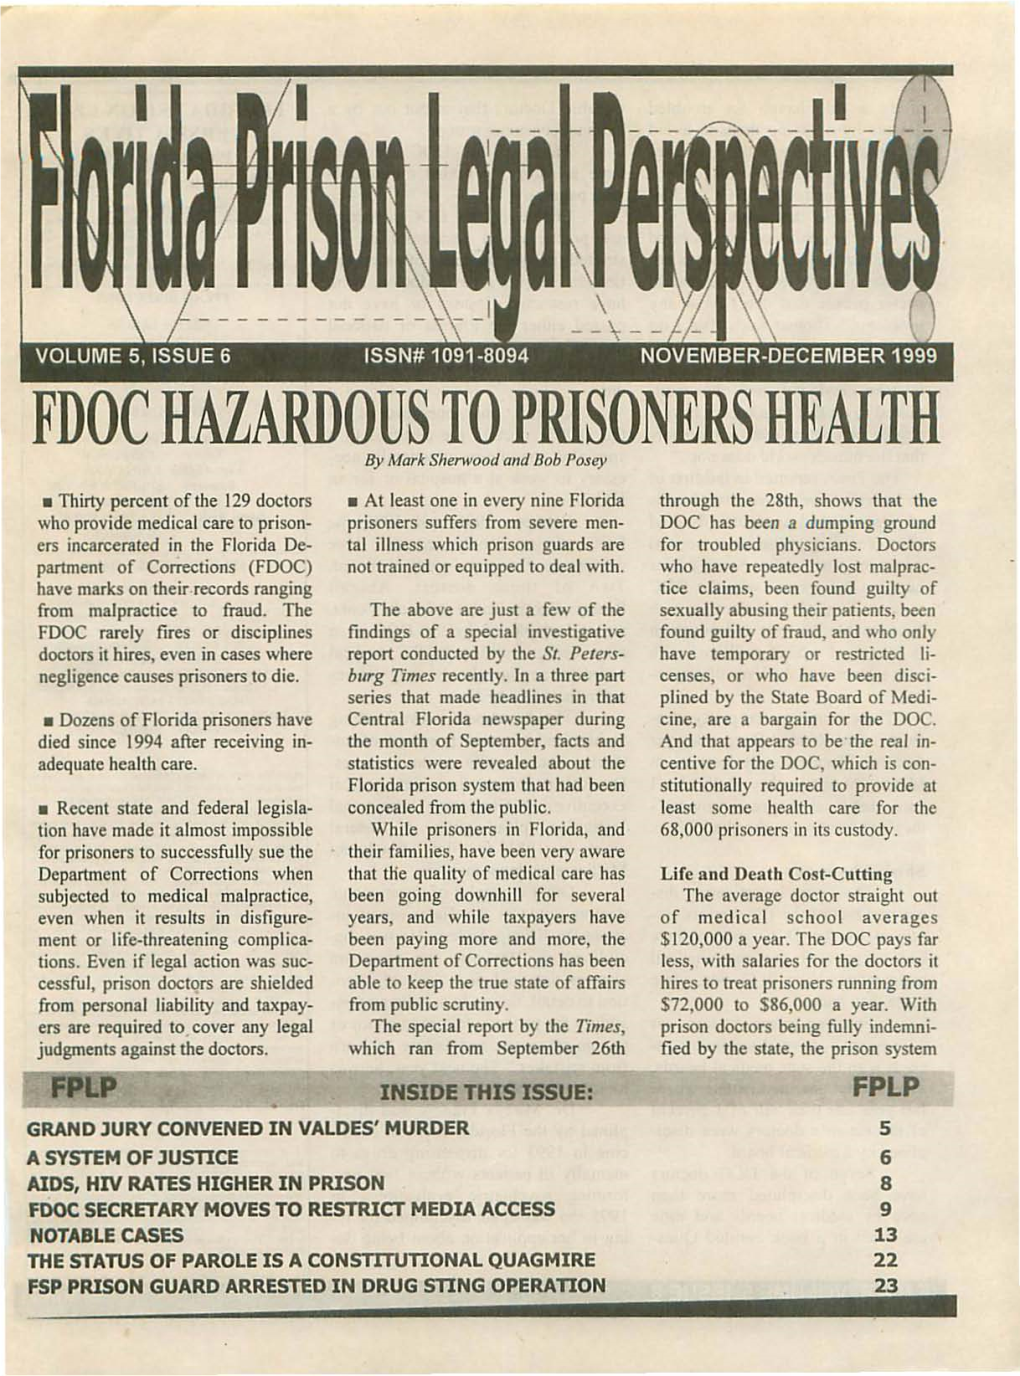 FDOC HAZARDOUS to PRISONERS HEALTH by Mark Shenvood and Bob Posey